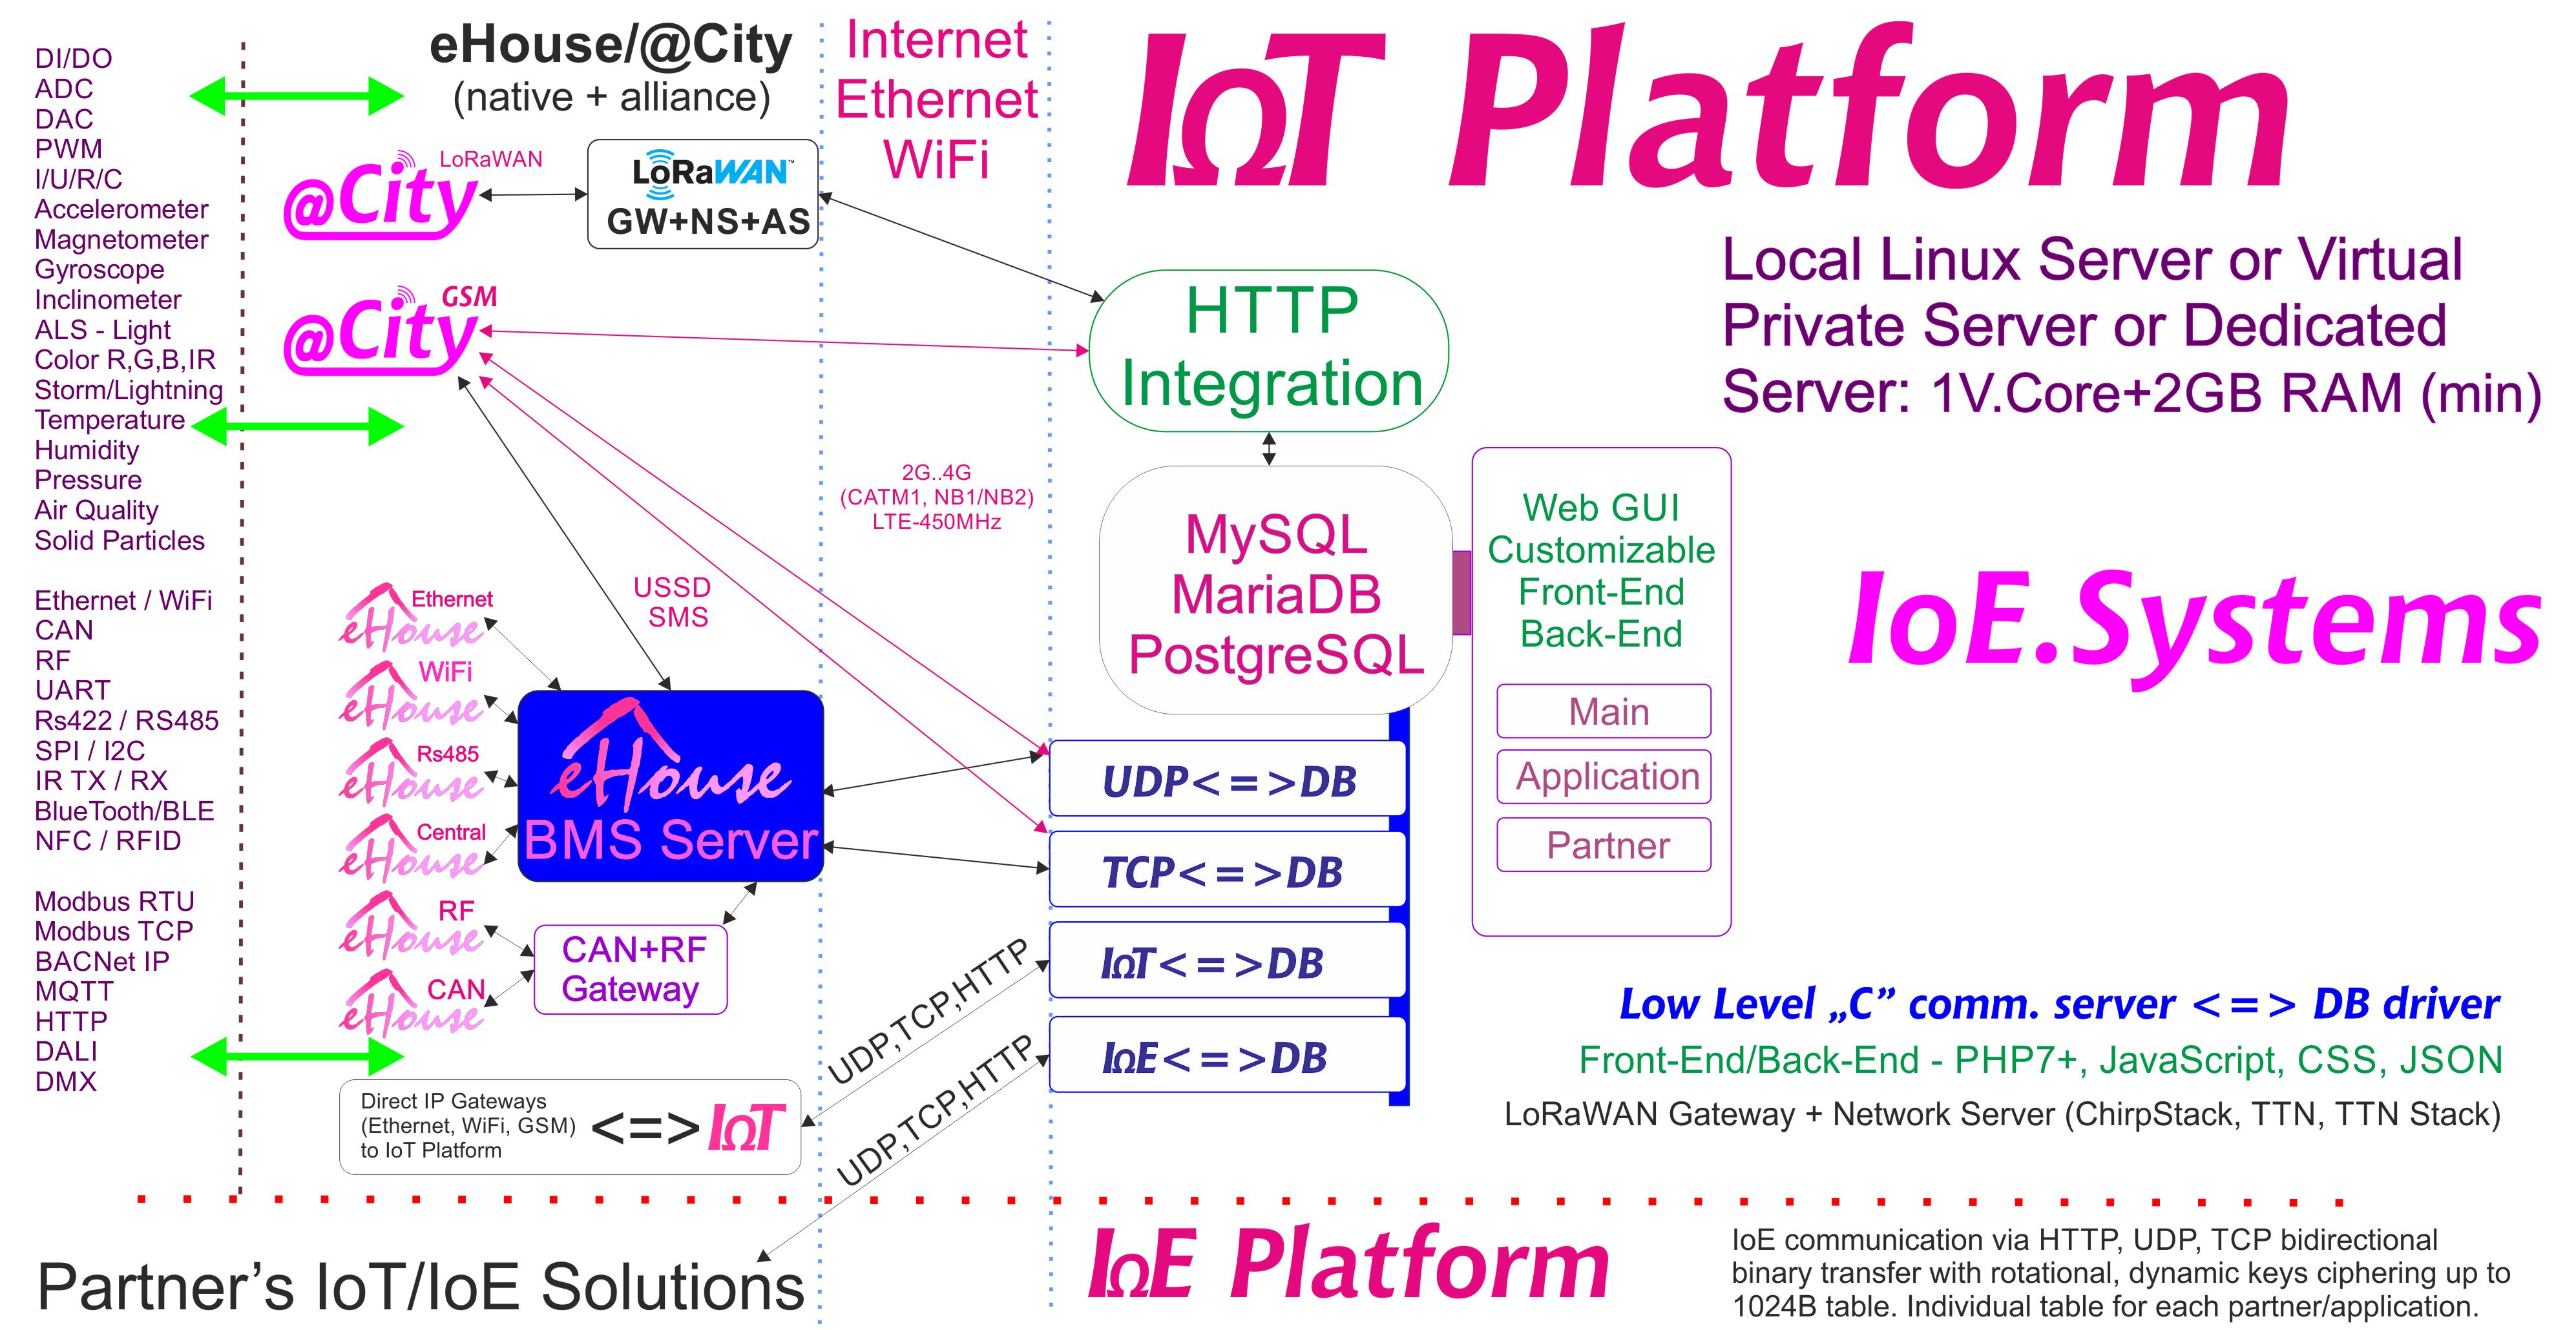 eHouse, eCity Server Software BAS, BMS, IoE, IoT Systems na Platform